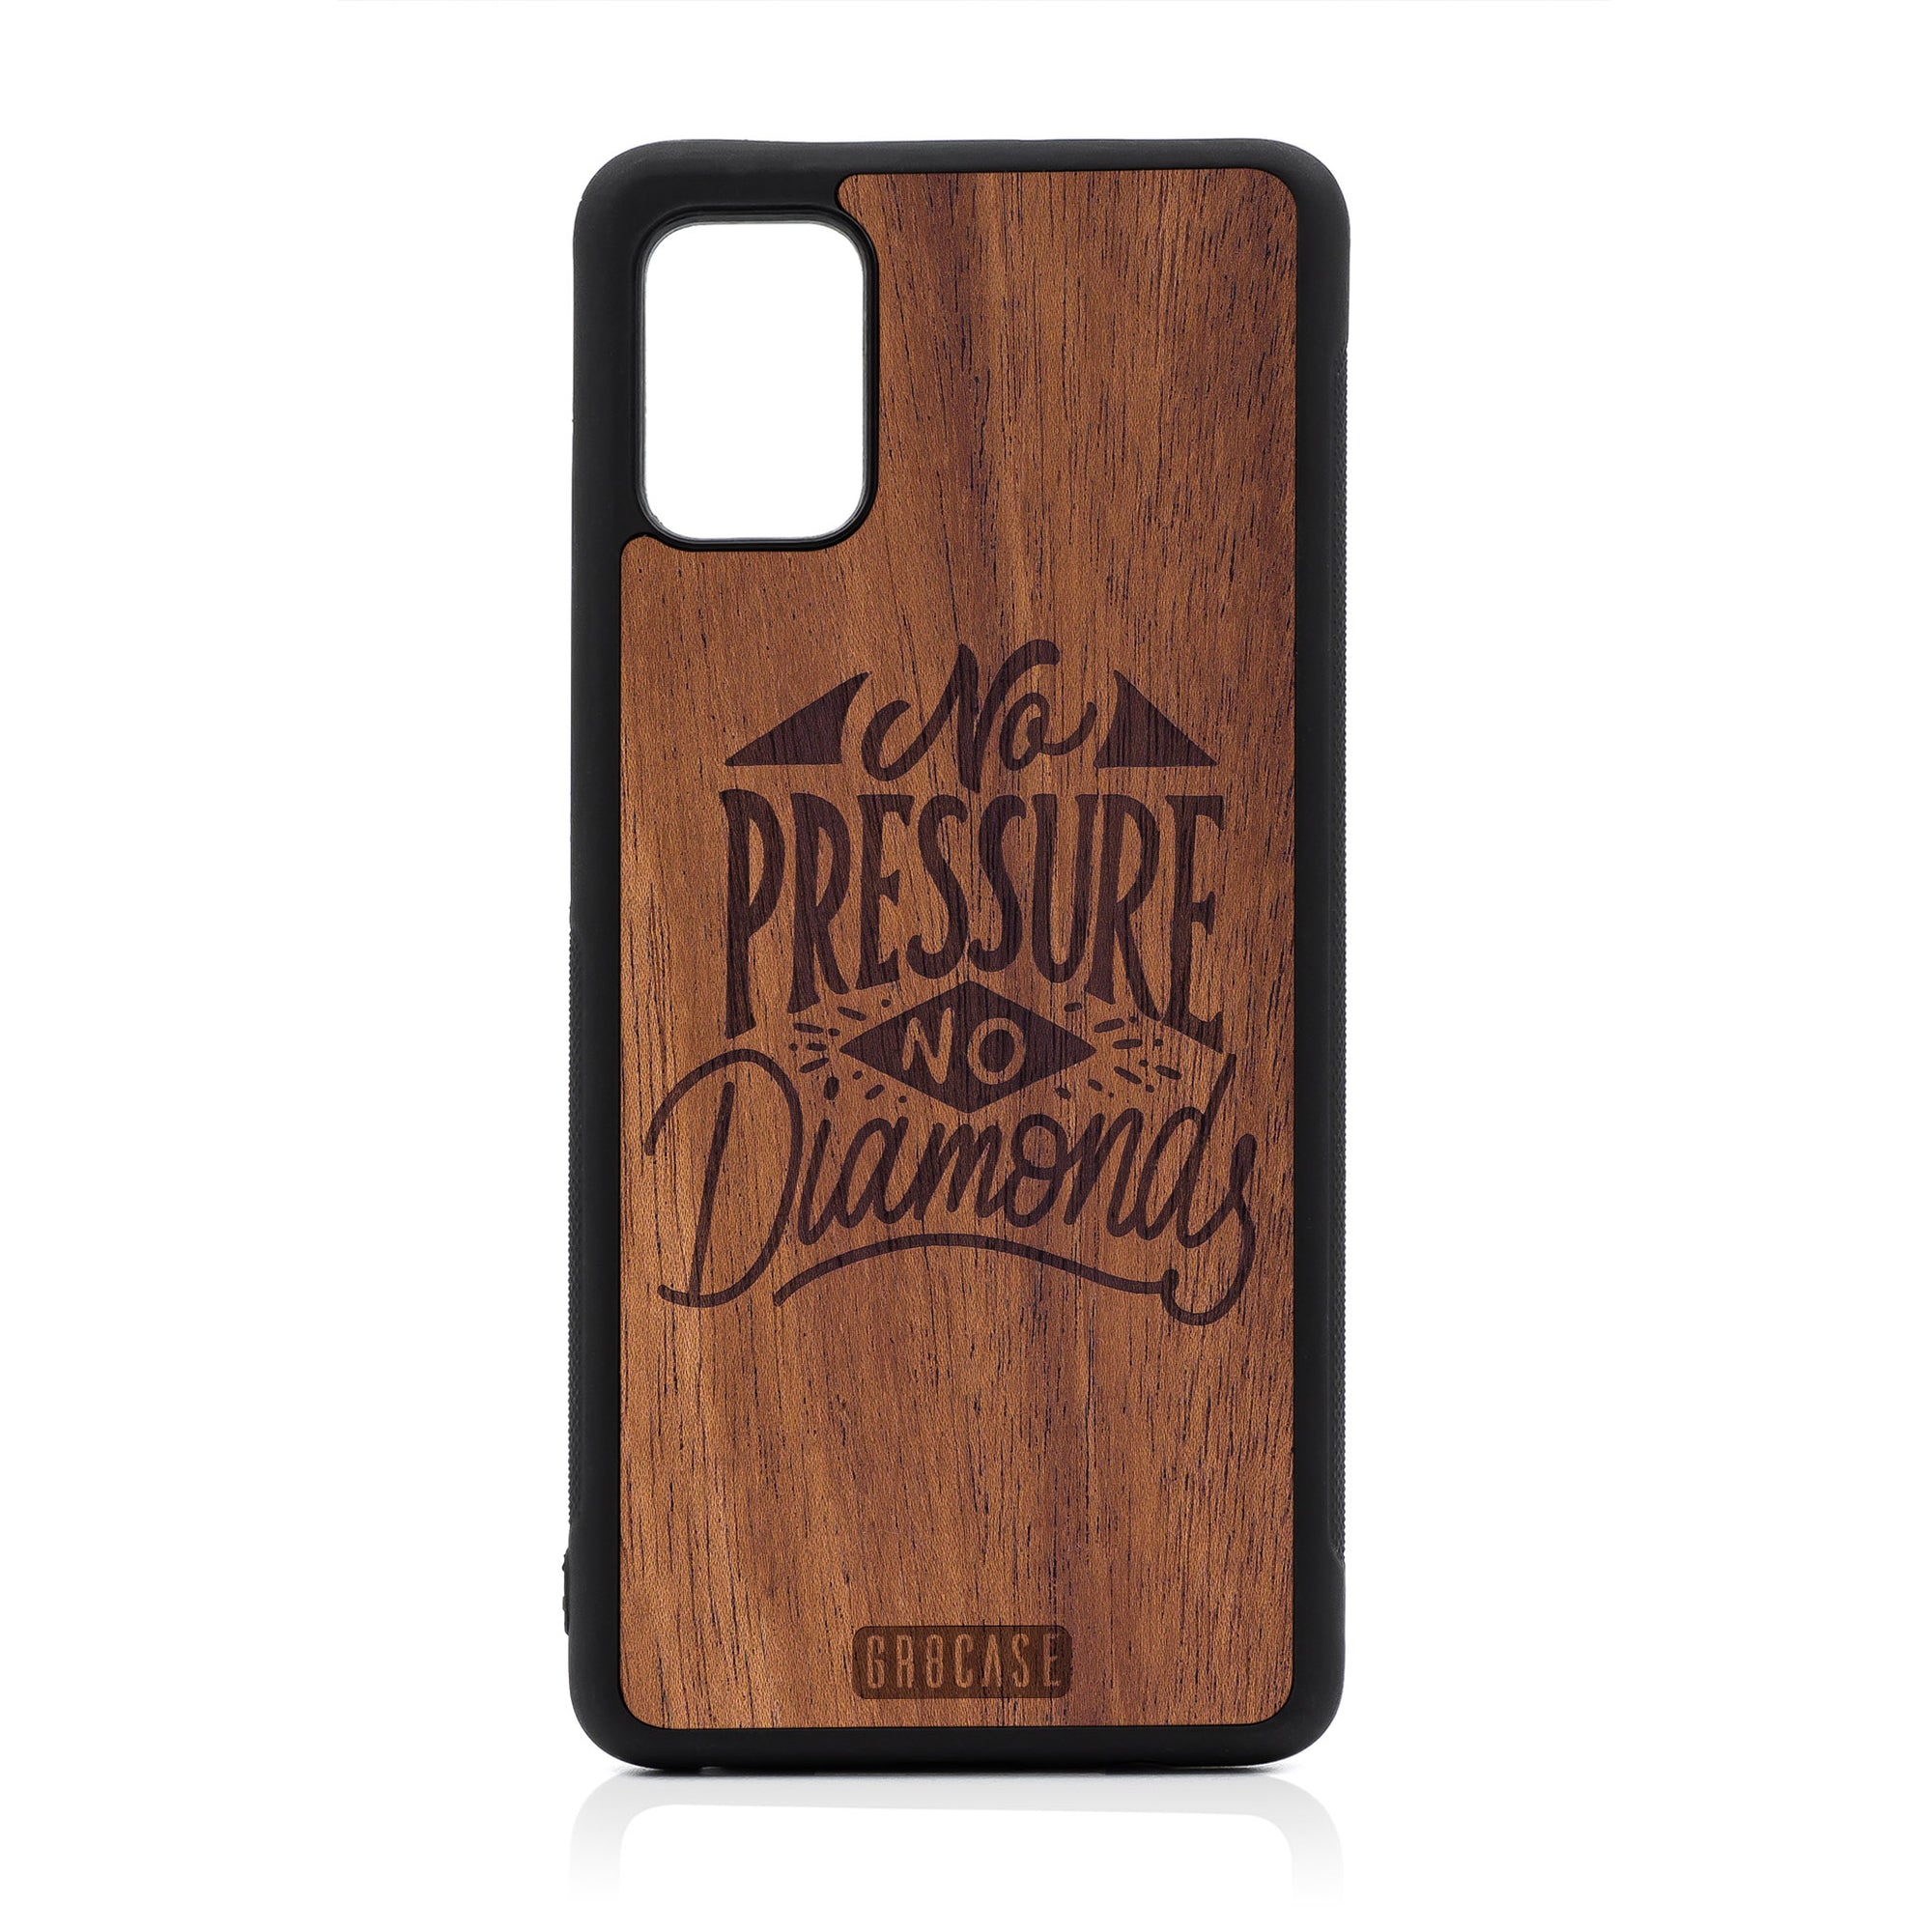 No Pressure No Diamonds Design Wood Case For Samsung Galaxy A51